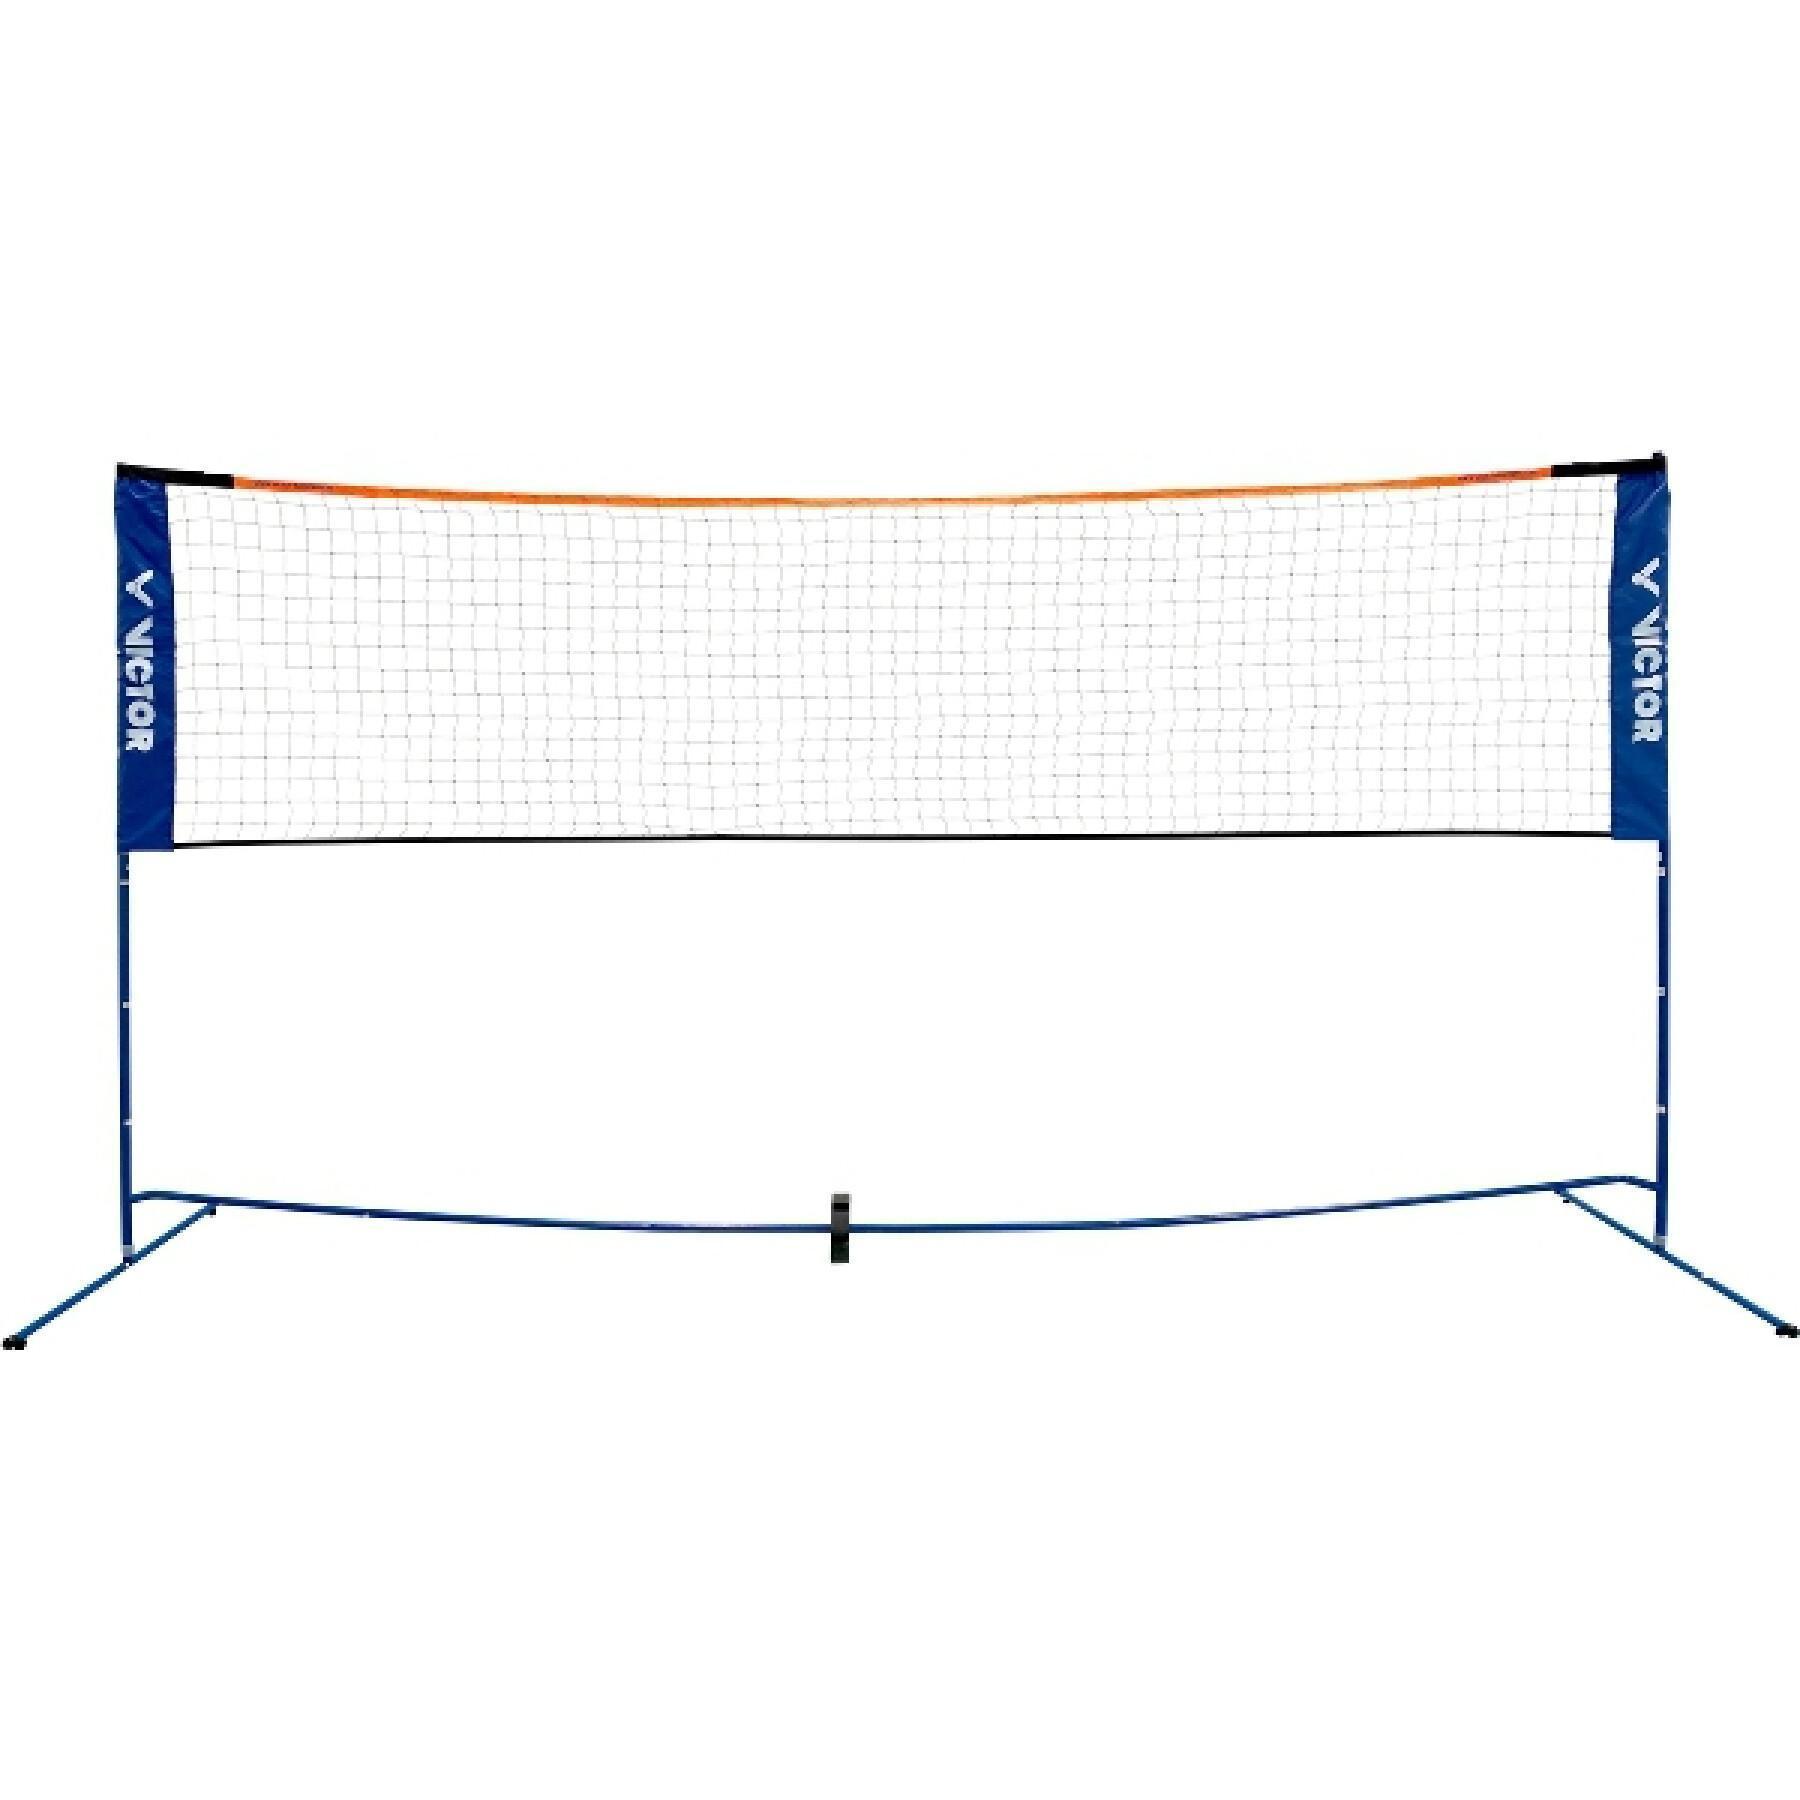 Mini badminton net Victor Net